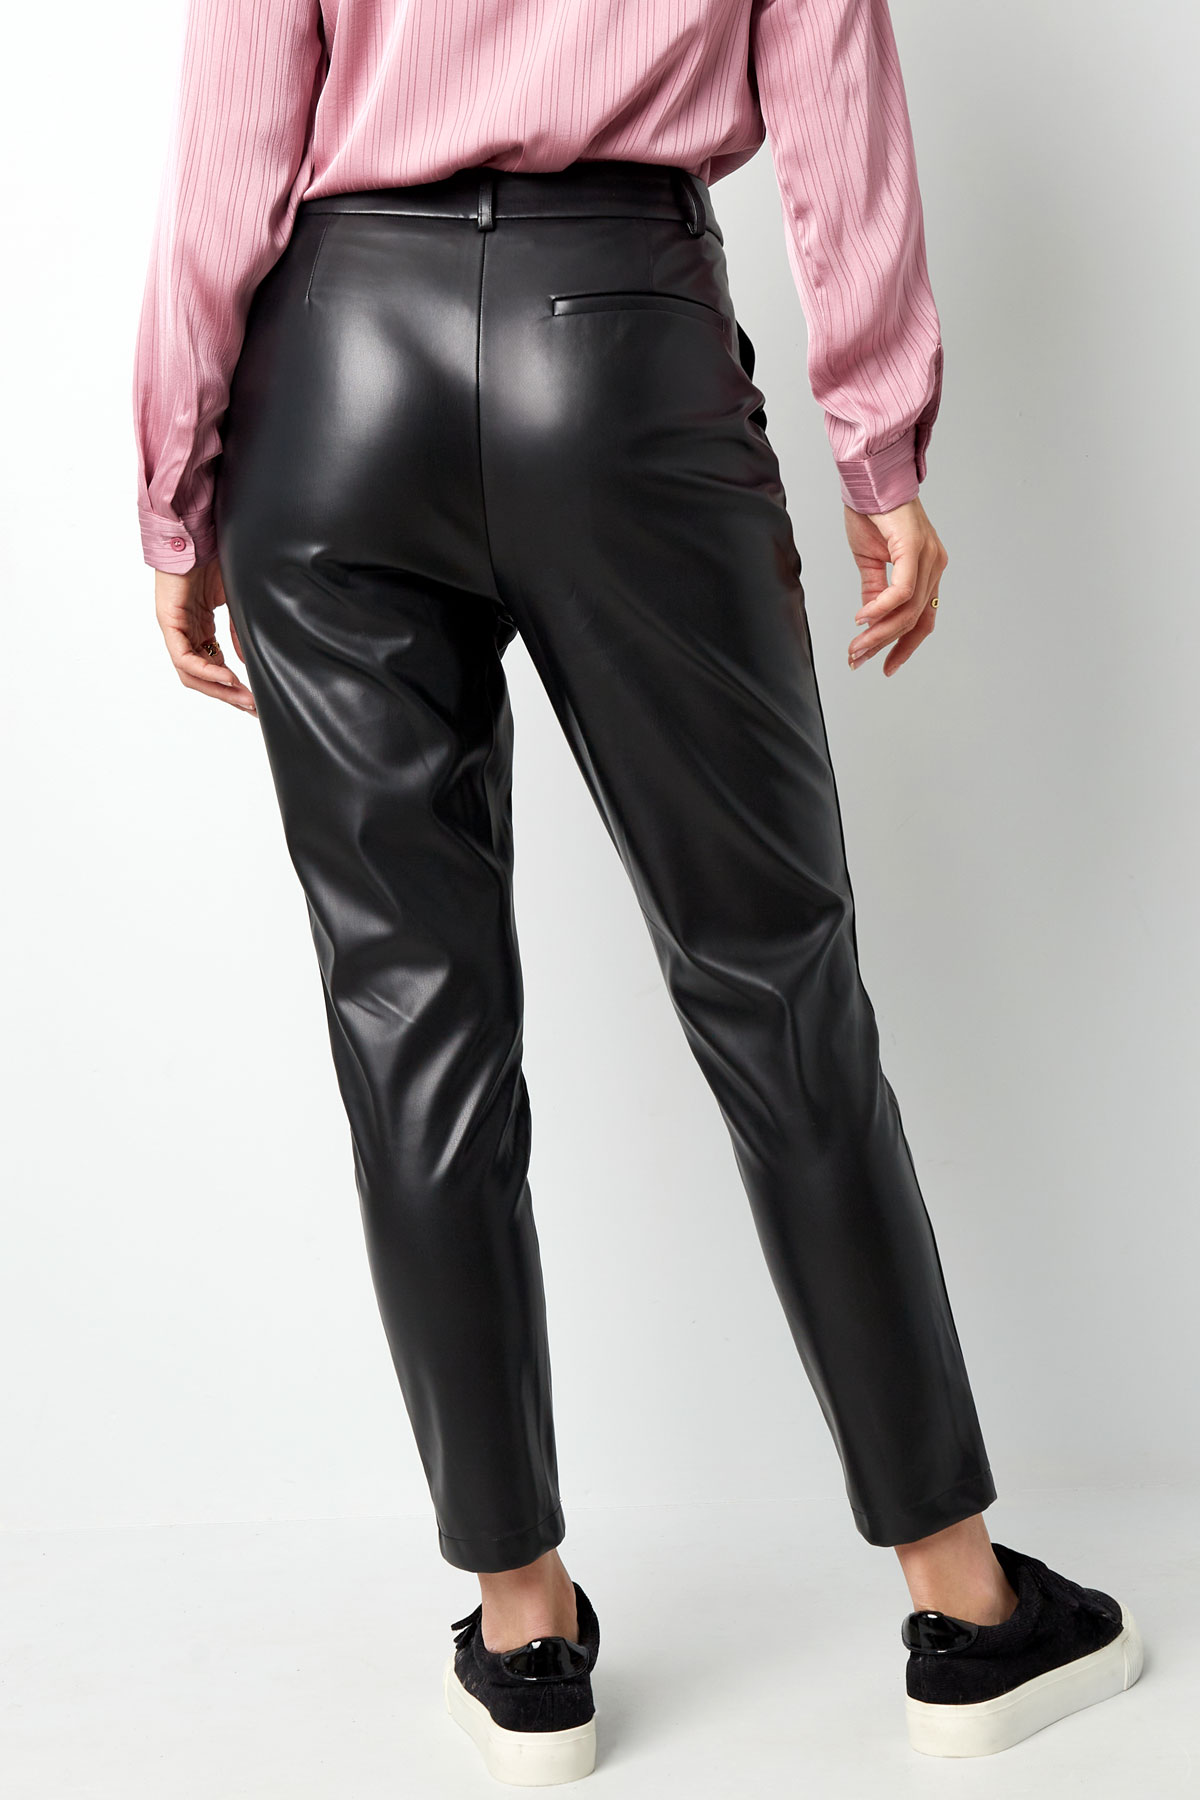 Pantalones de cuero PU - negro h5 Imagen6